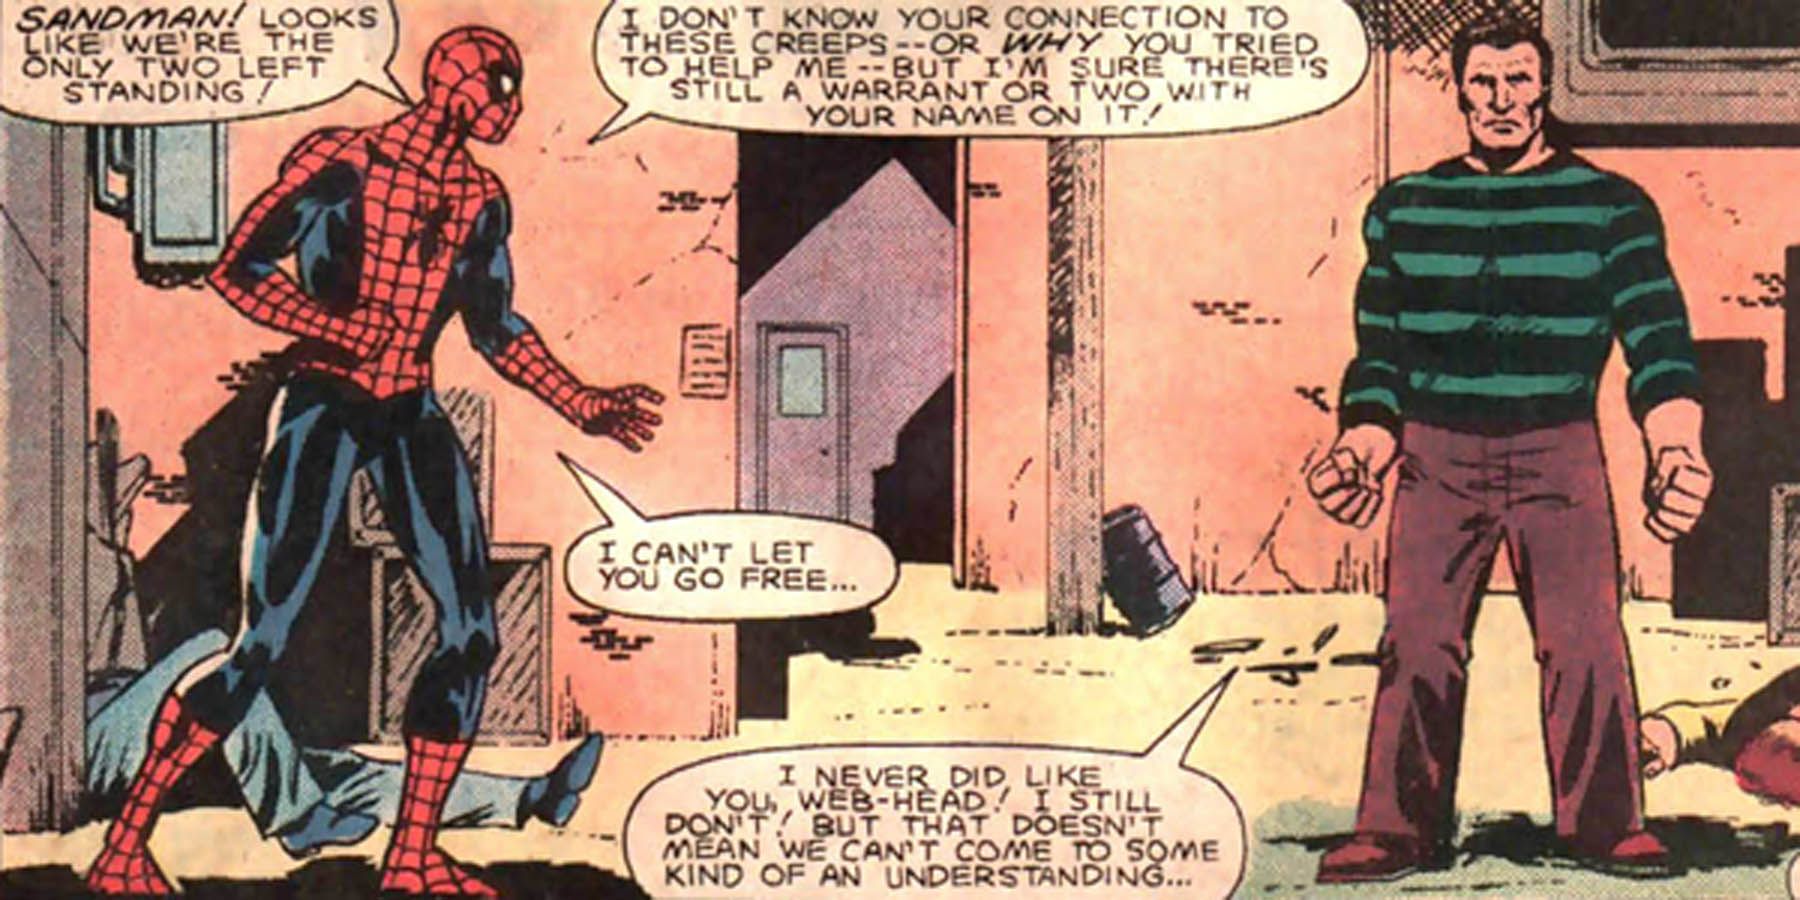 Sandman saves Spider-Man